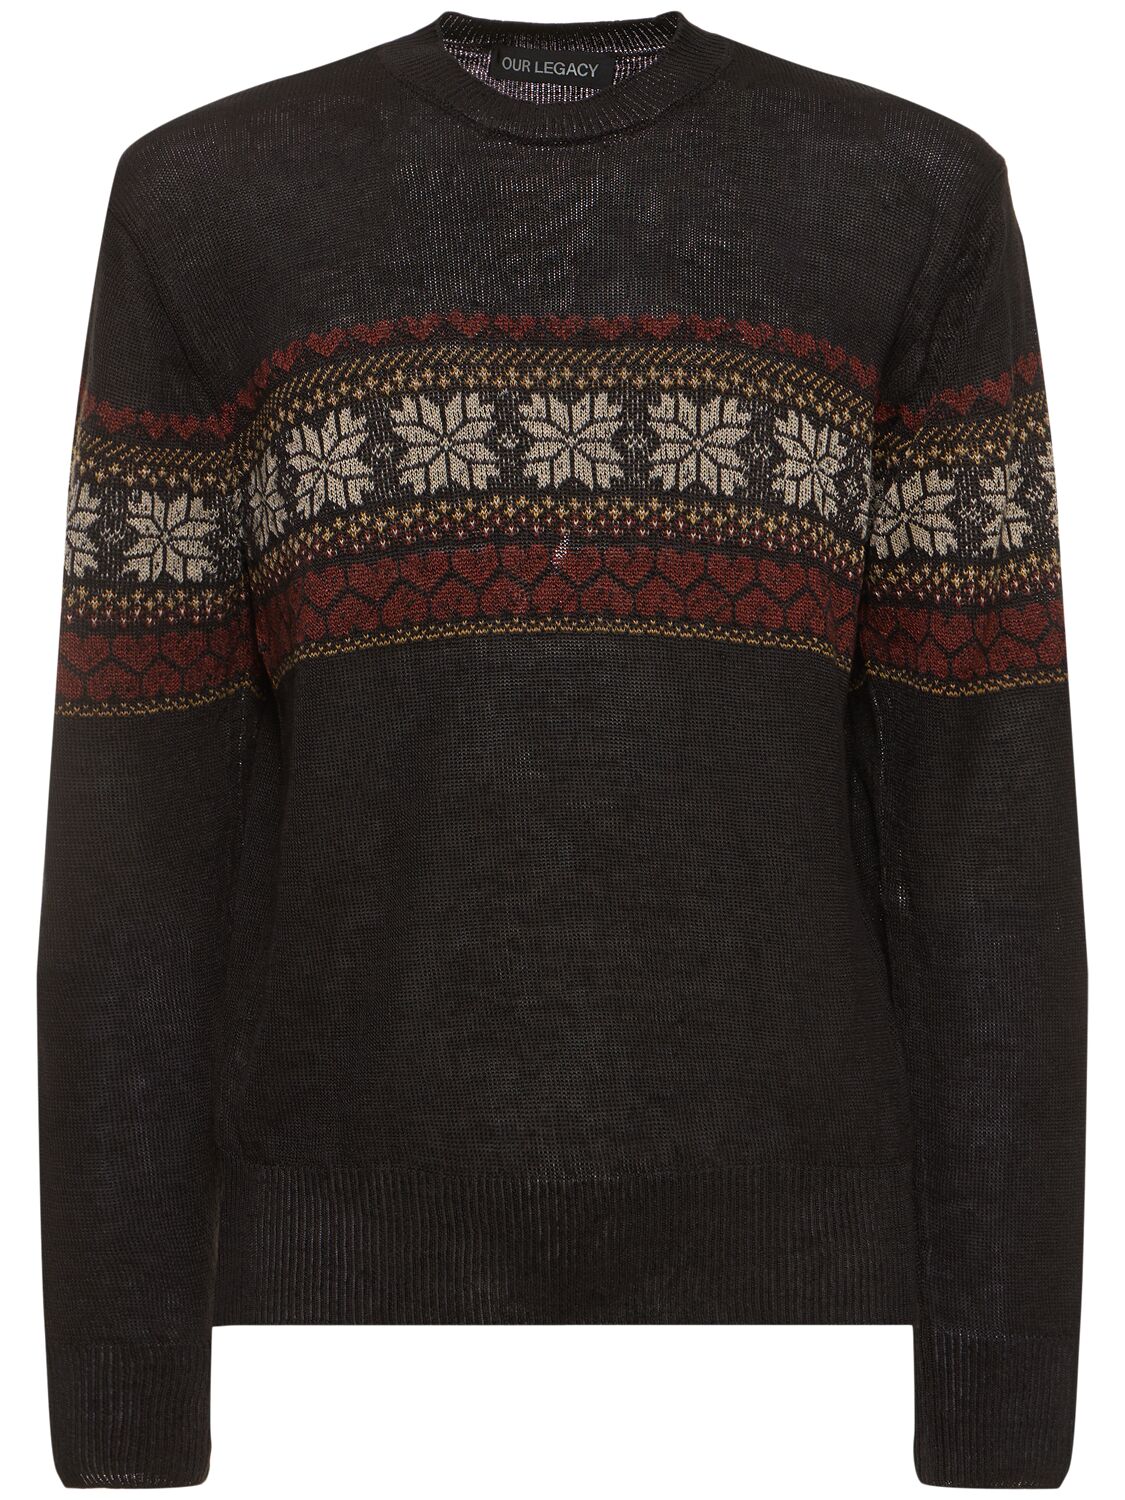 Shop Our Legacy Hemp Knit Crewneck Sweater In Black